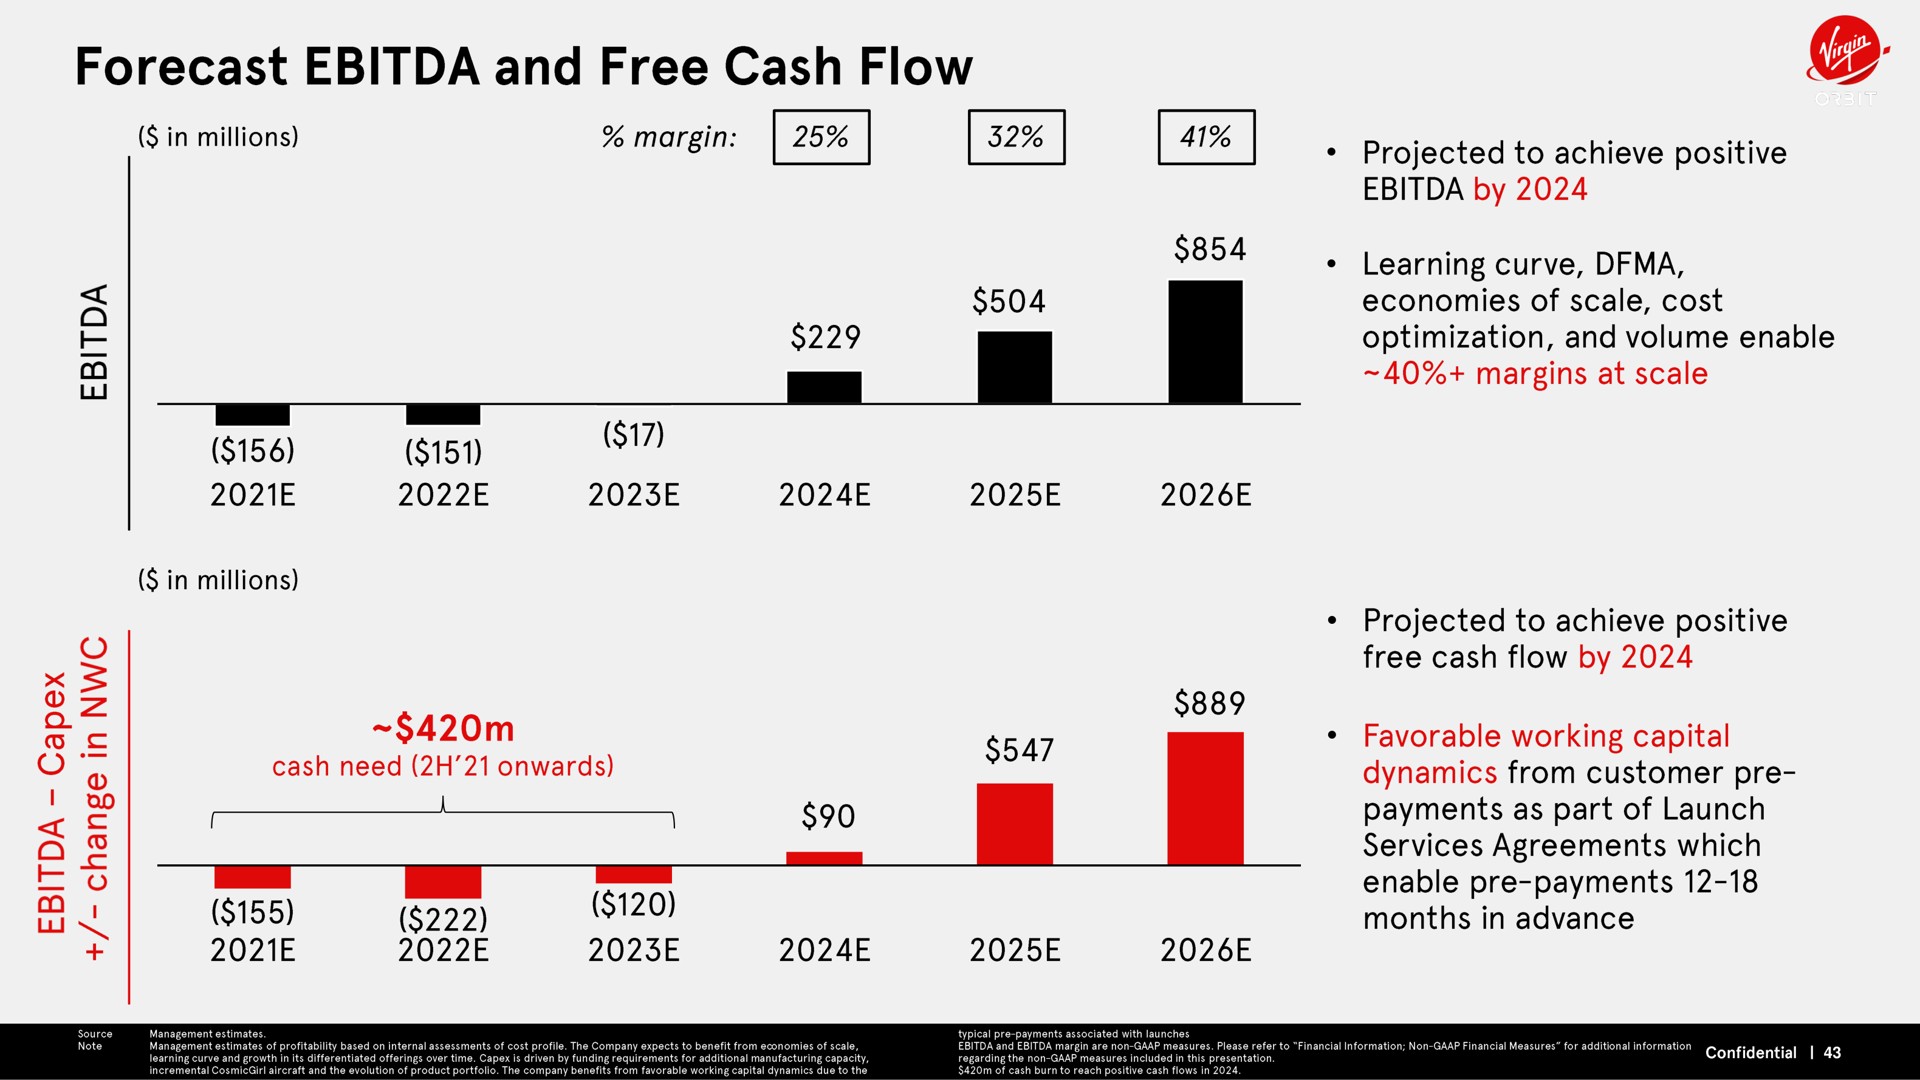 forecast and free cash flow | Virgin Orbit